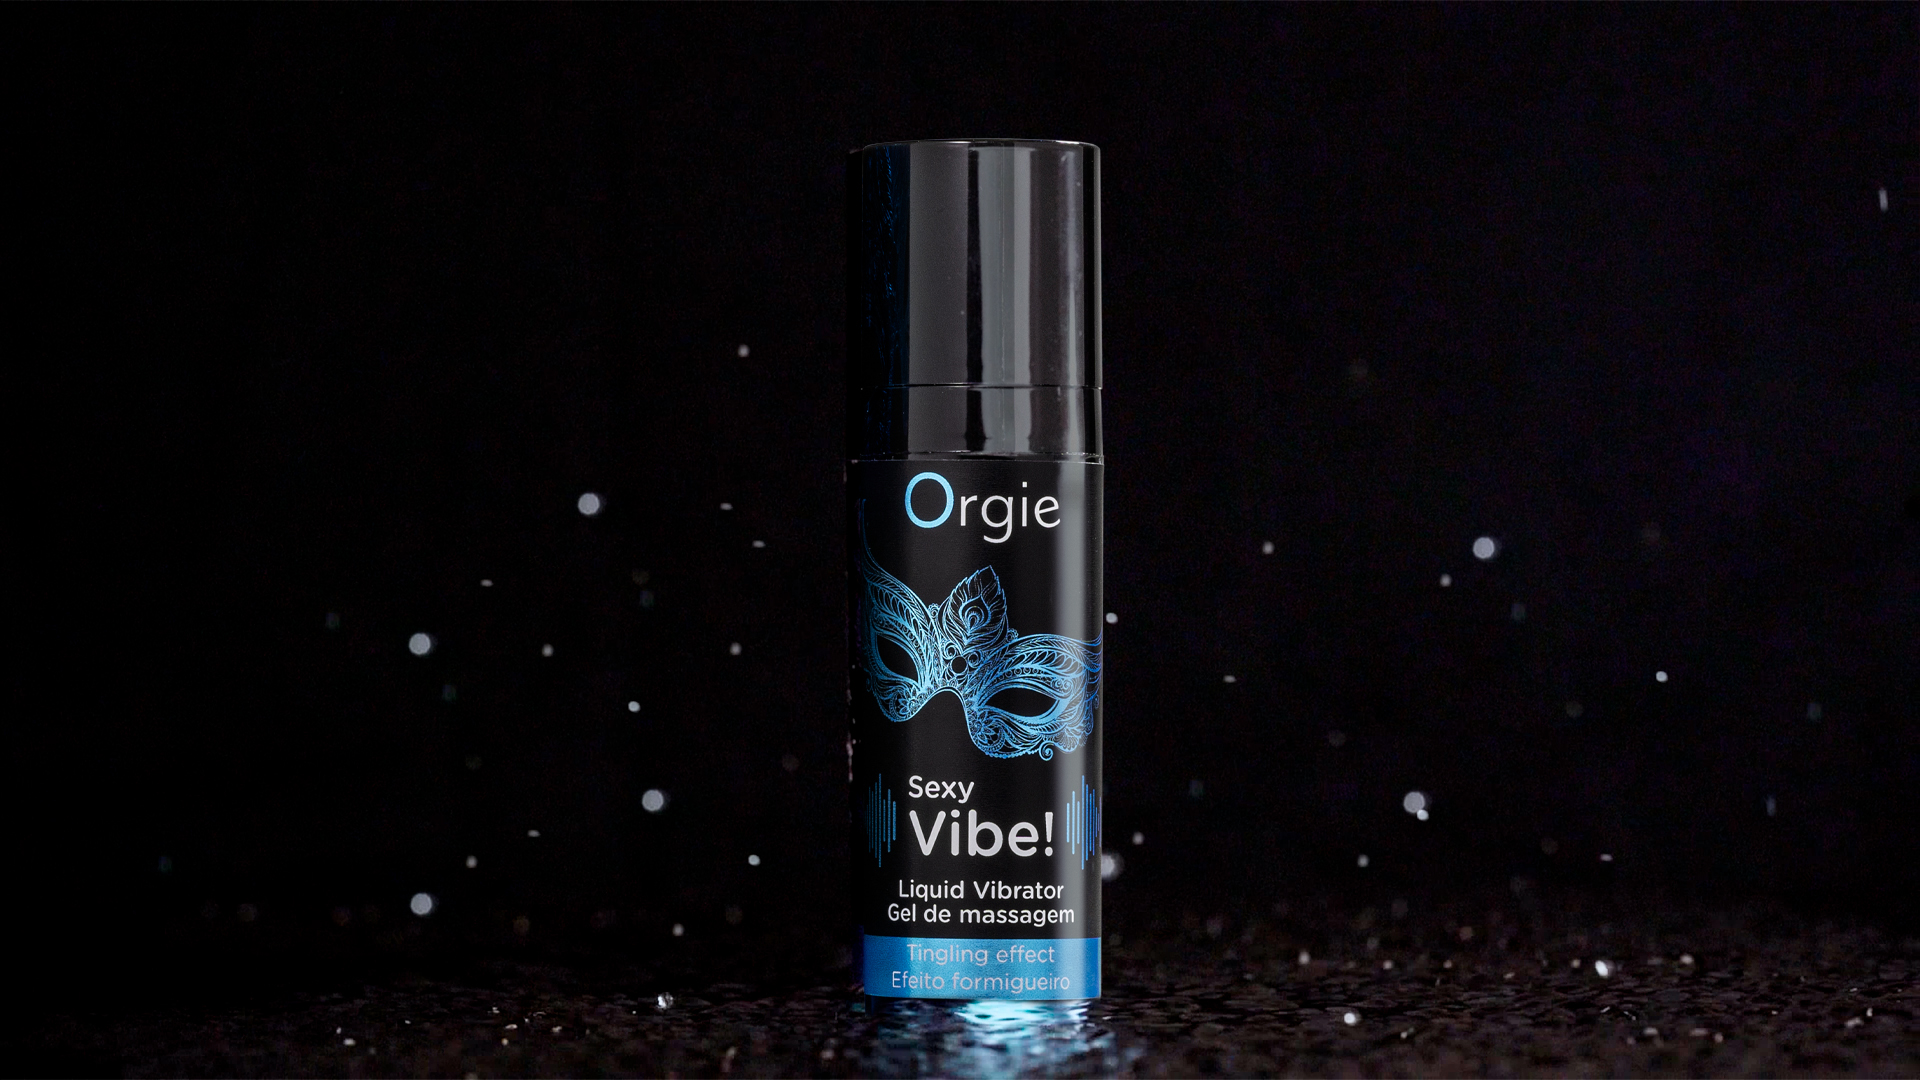 ORGIE Sexy Vibe! Liquid Vibrator 15ml